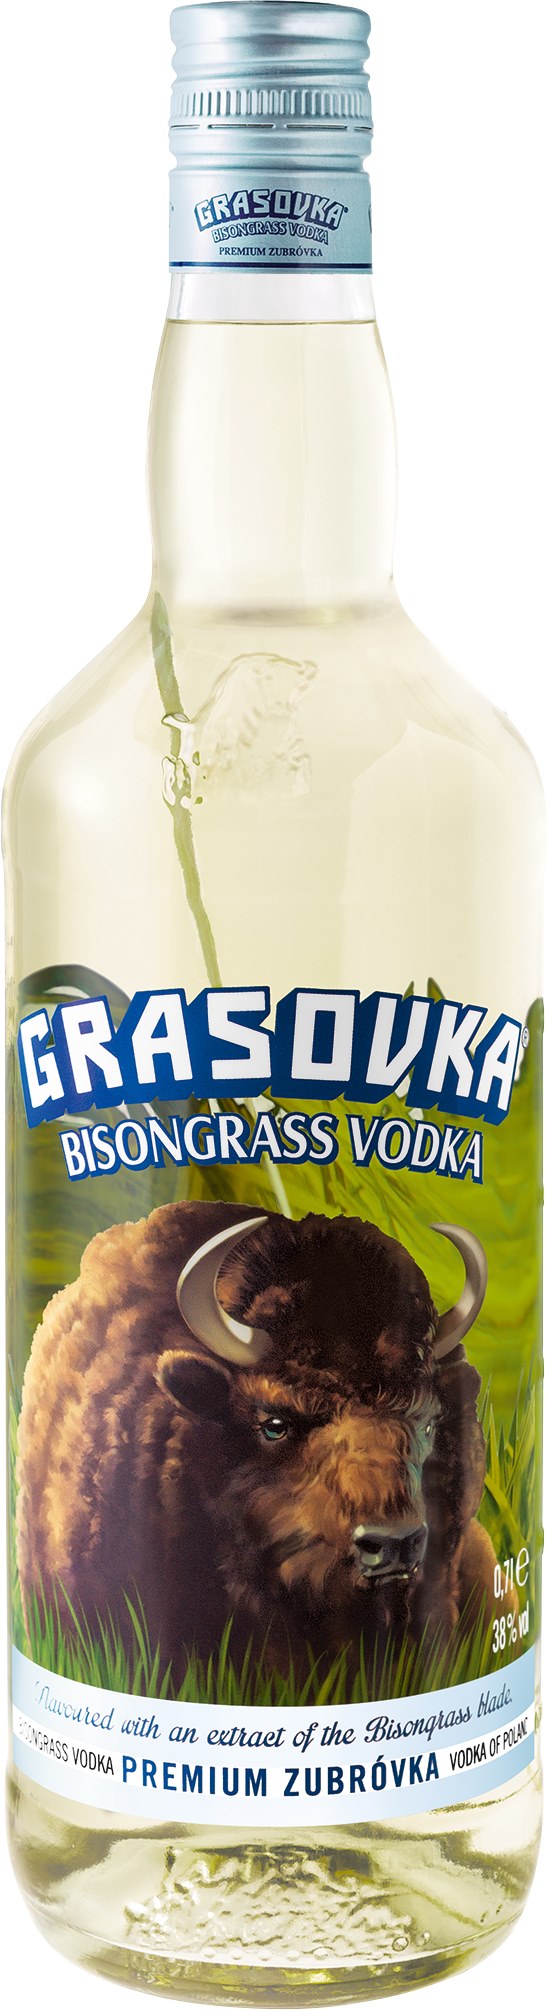 Grasovka Vodka _0_7l